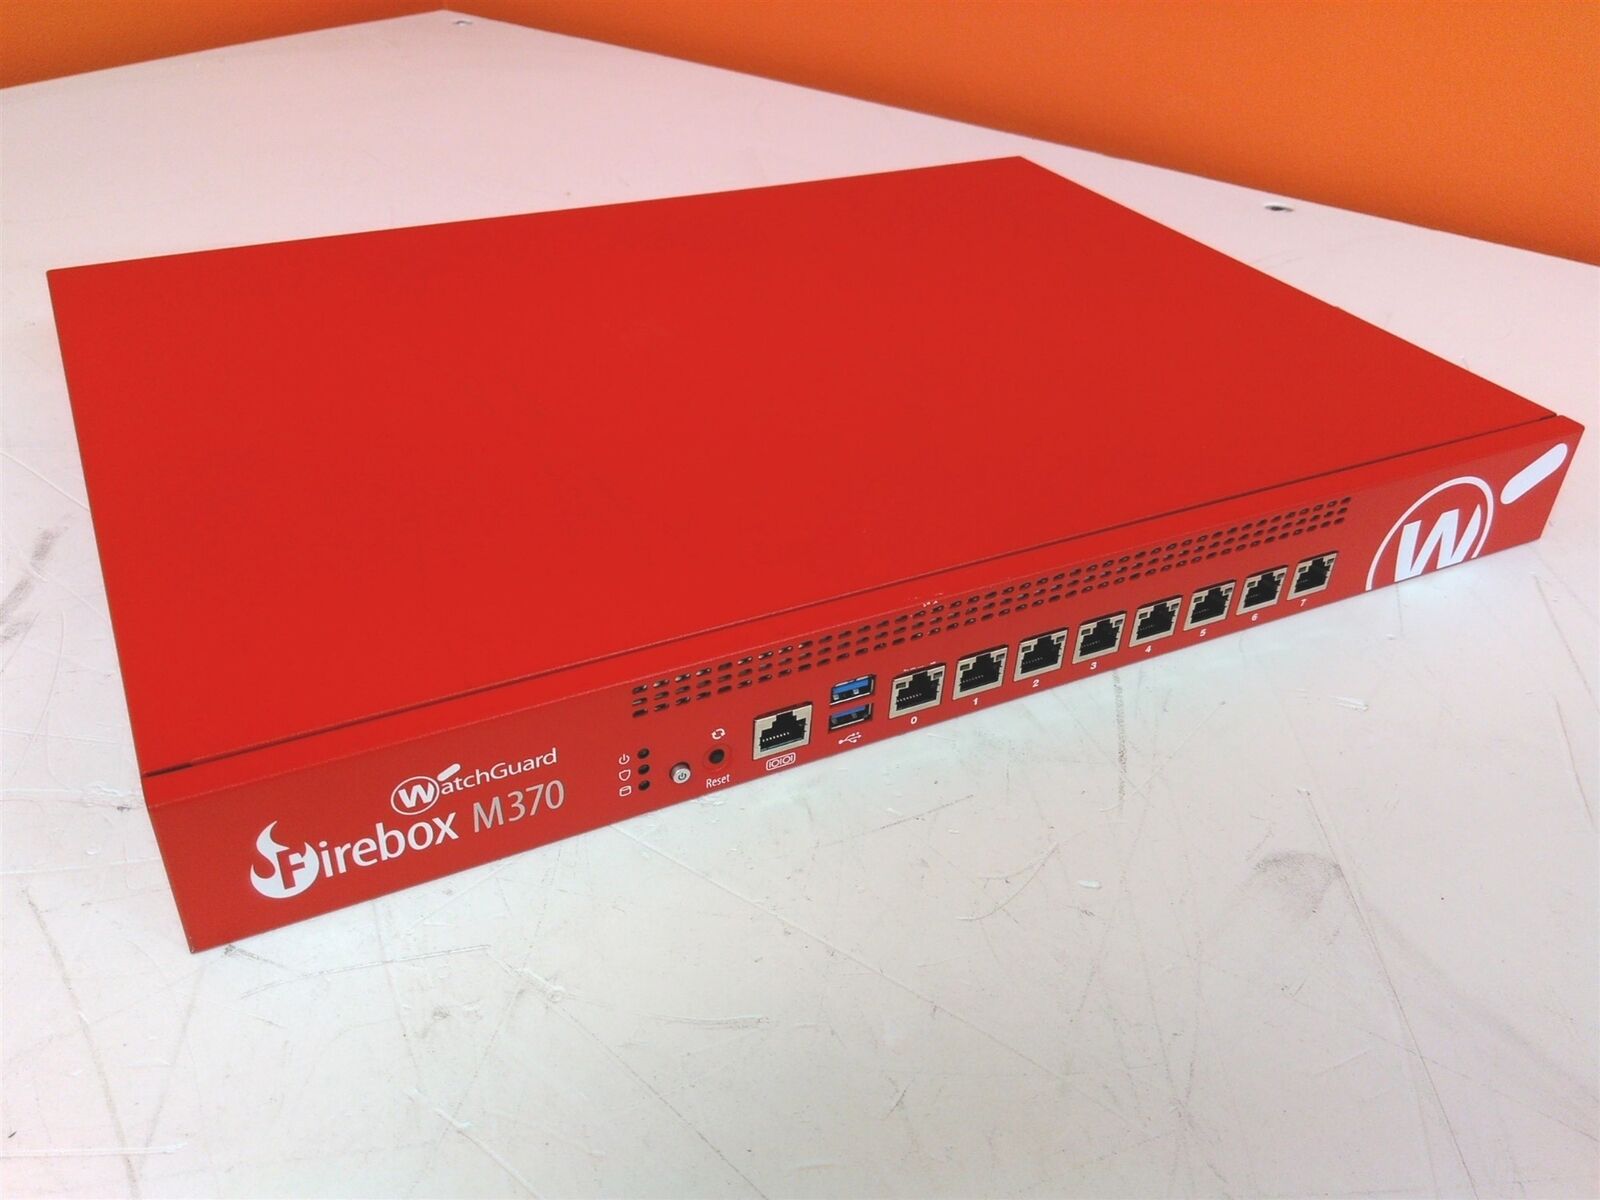 Watchguard Firebox M370 WL6AE8 Network Security Appliance 